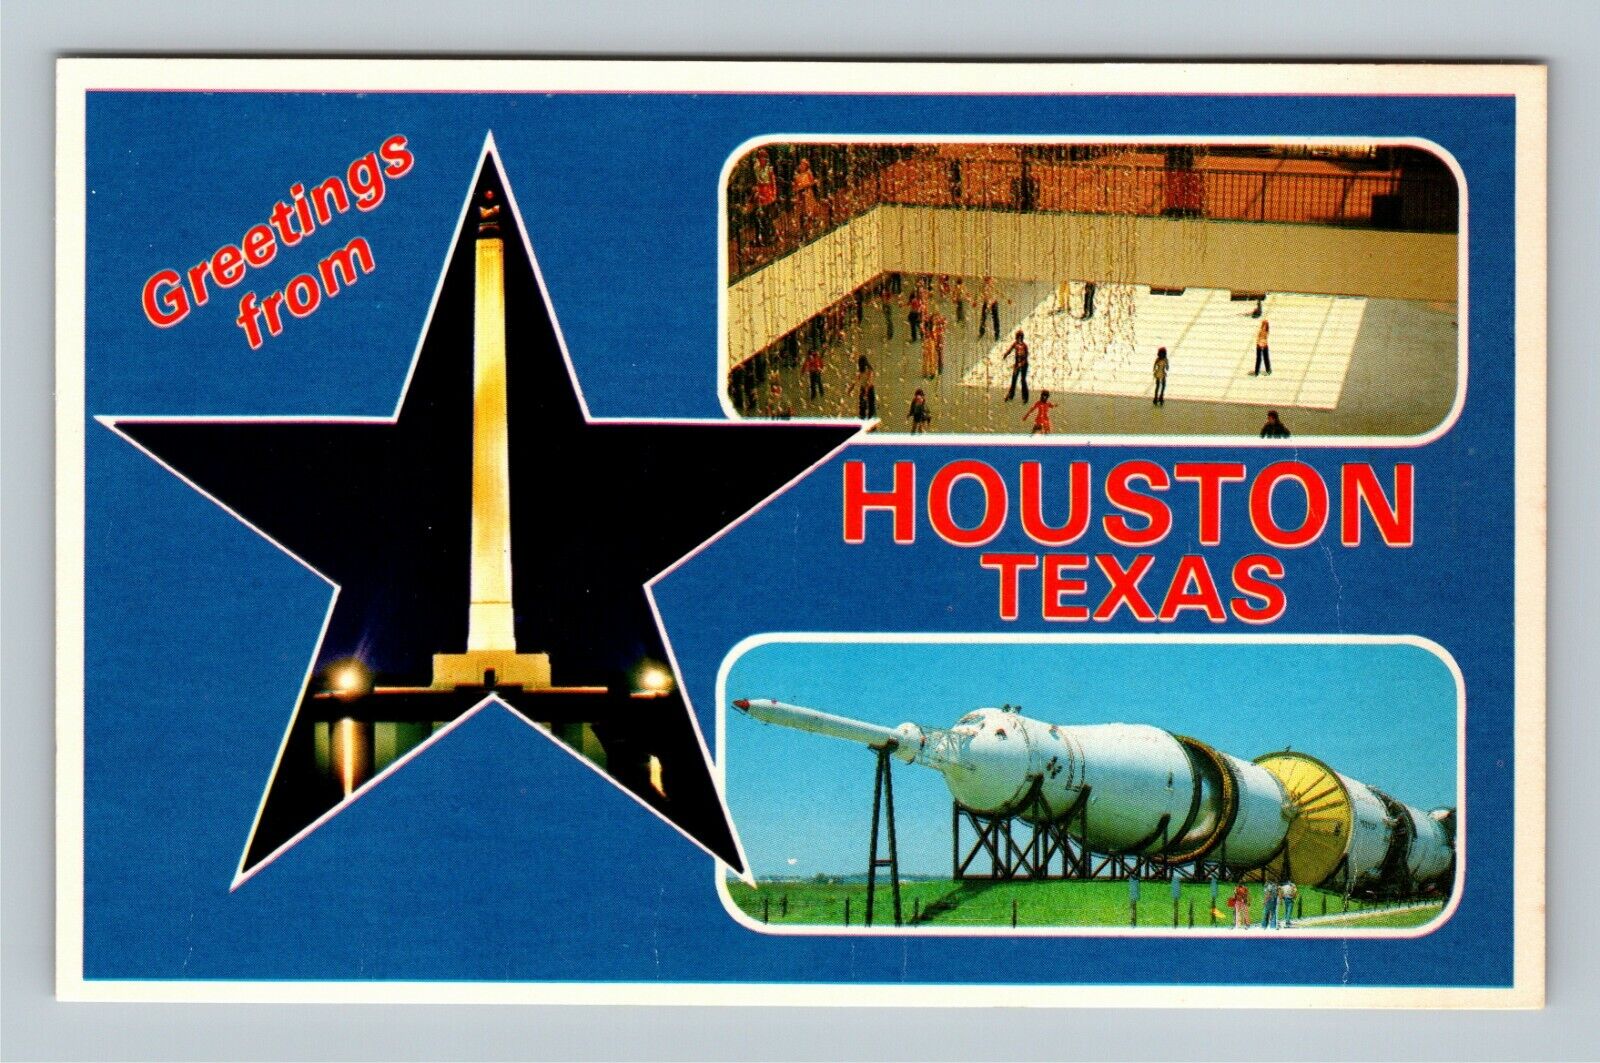 Houston TX, Greetings Galleria Mall Ice Skating Chrome Texas c1970 Postcard